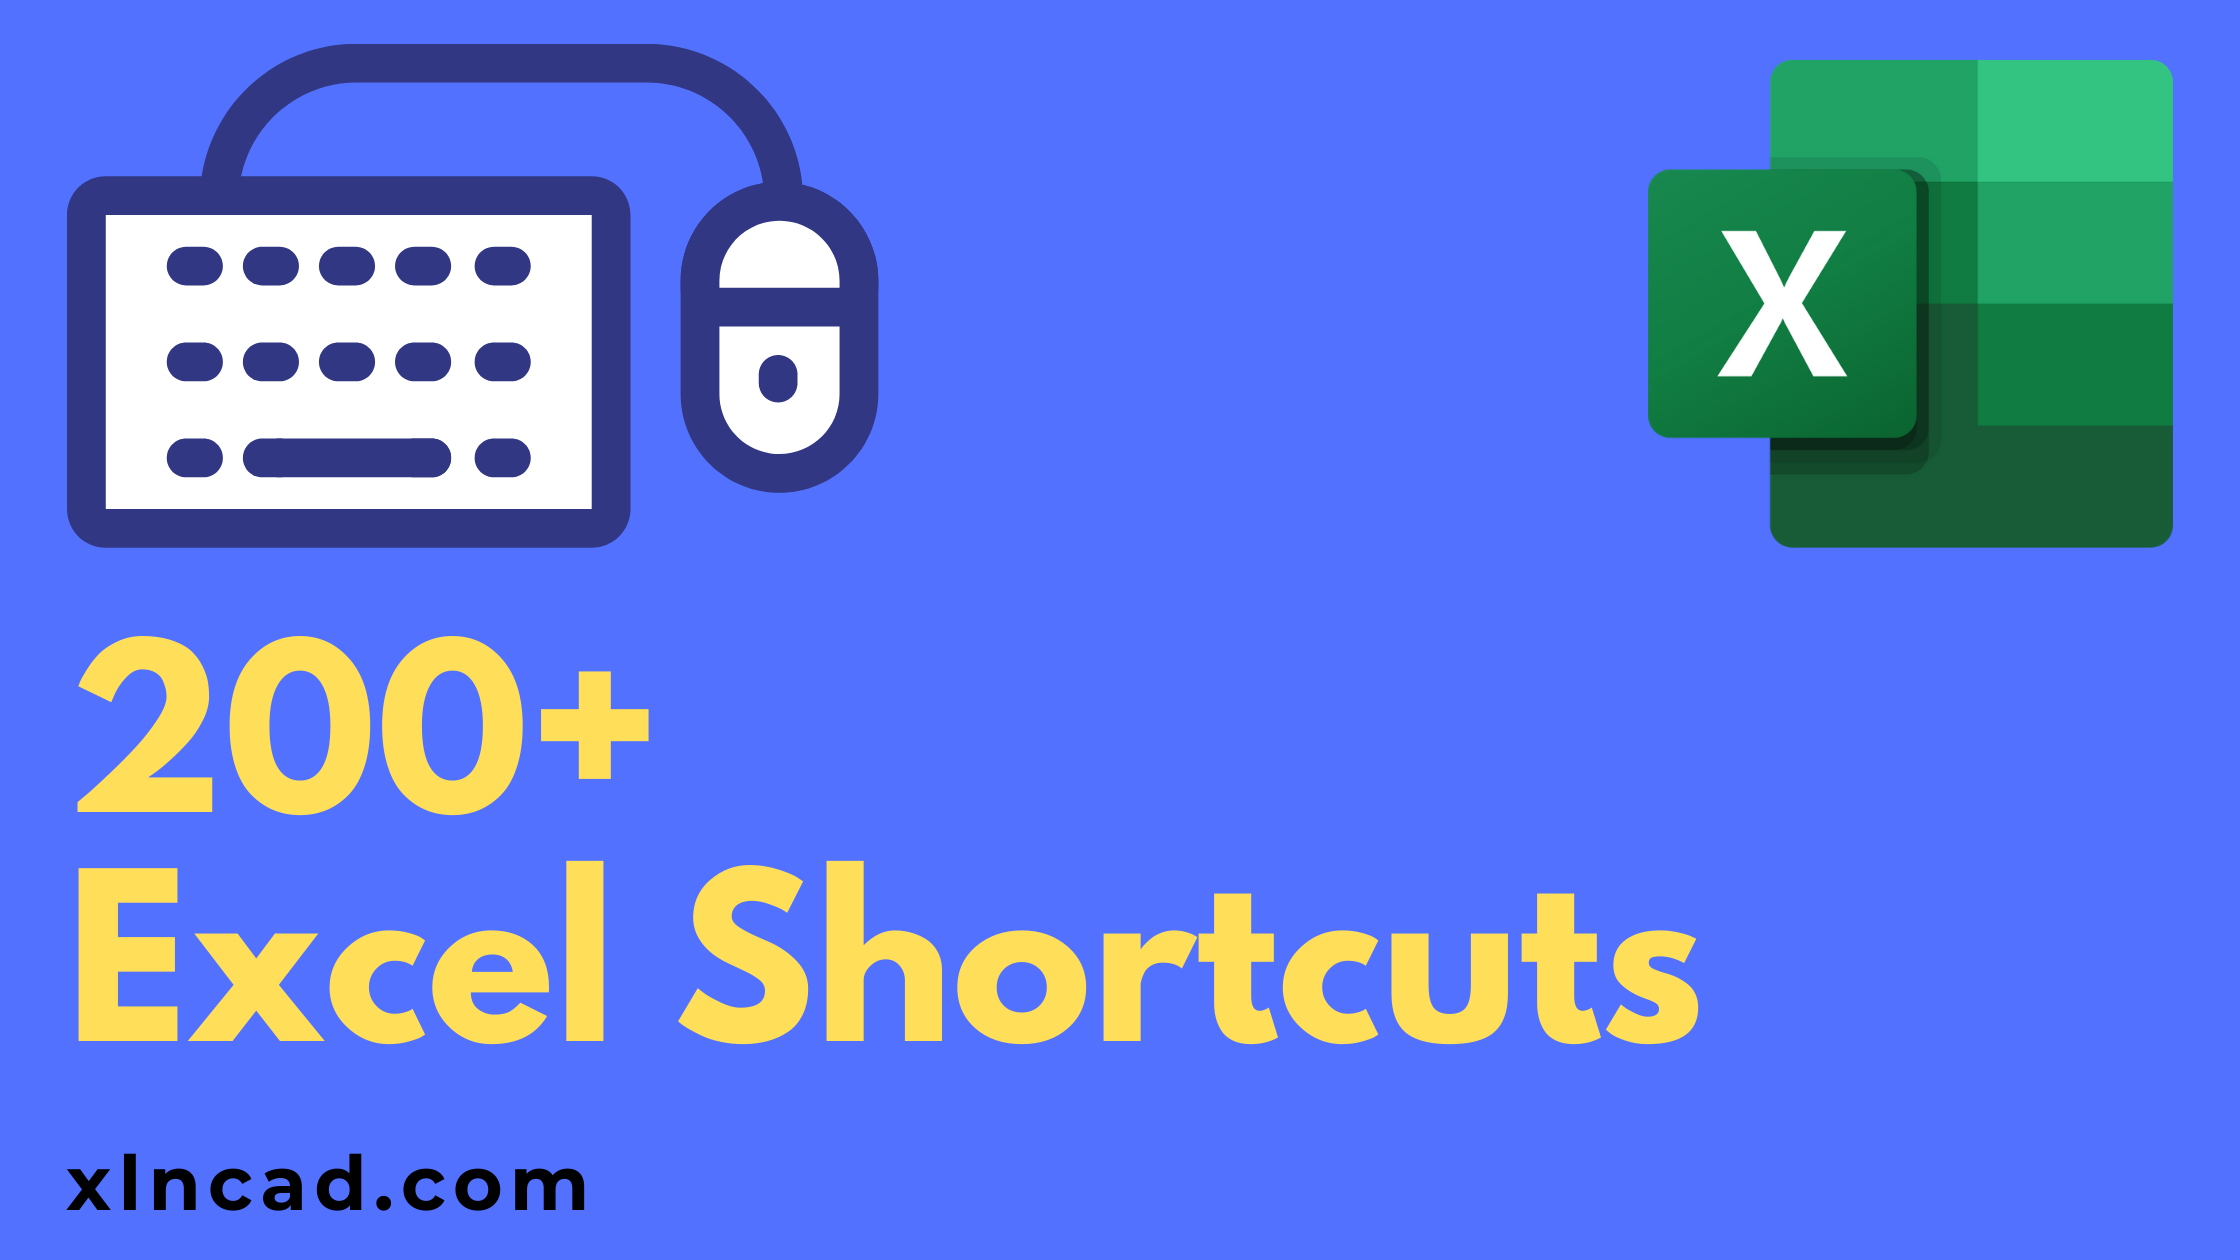 ctrl shortcuts in excel